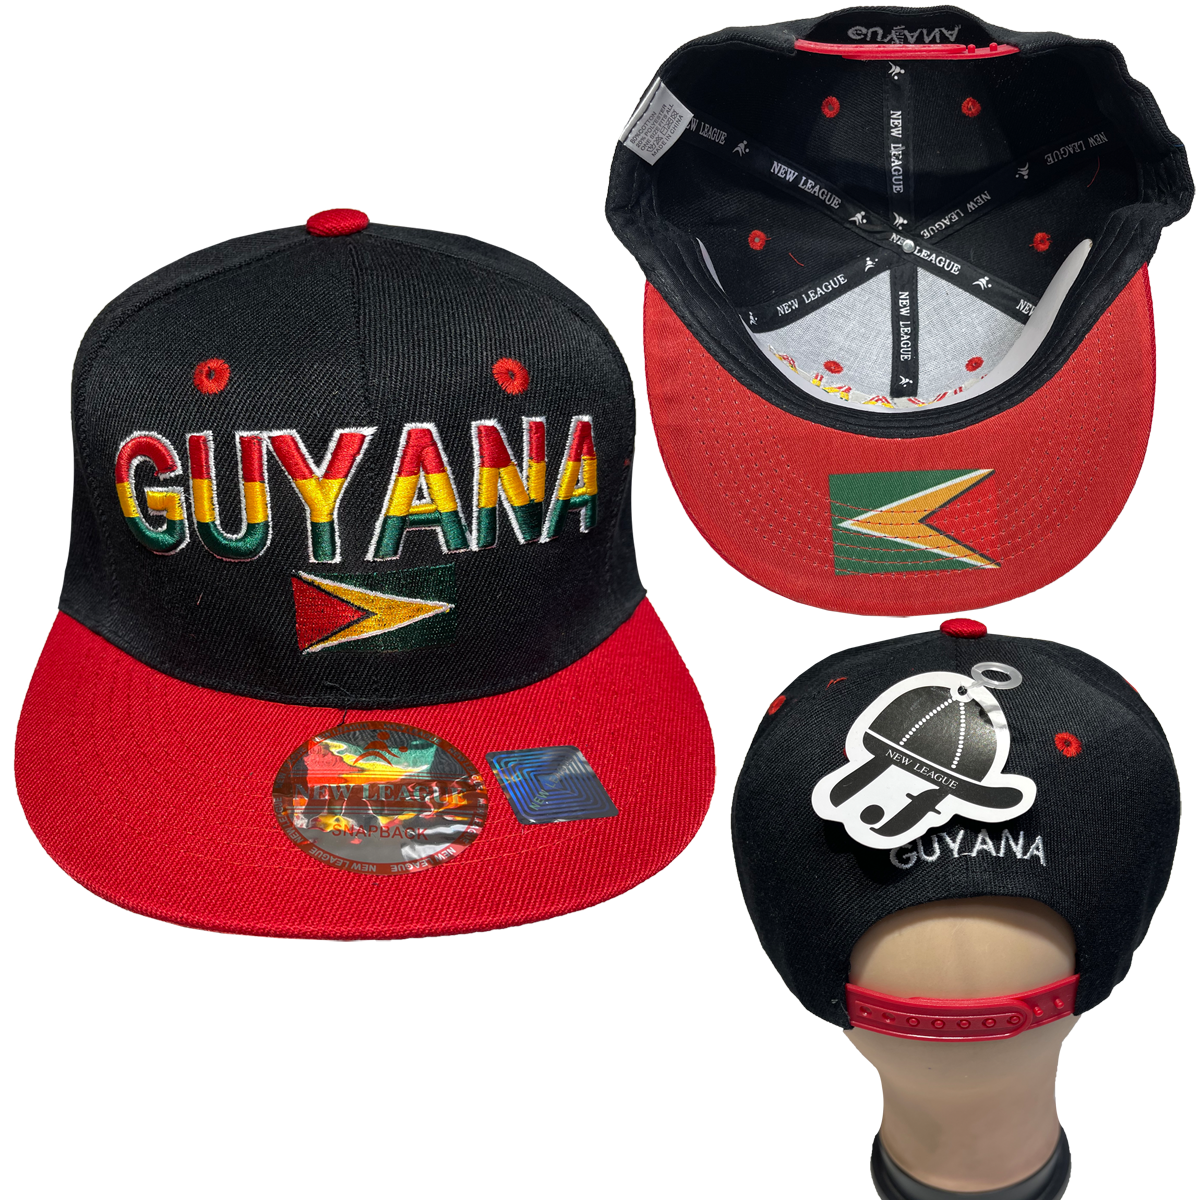 Guyana Flag Embroidered Snapback Flat Brim Adjustable Baseball Hats/Caps.